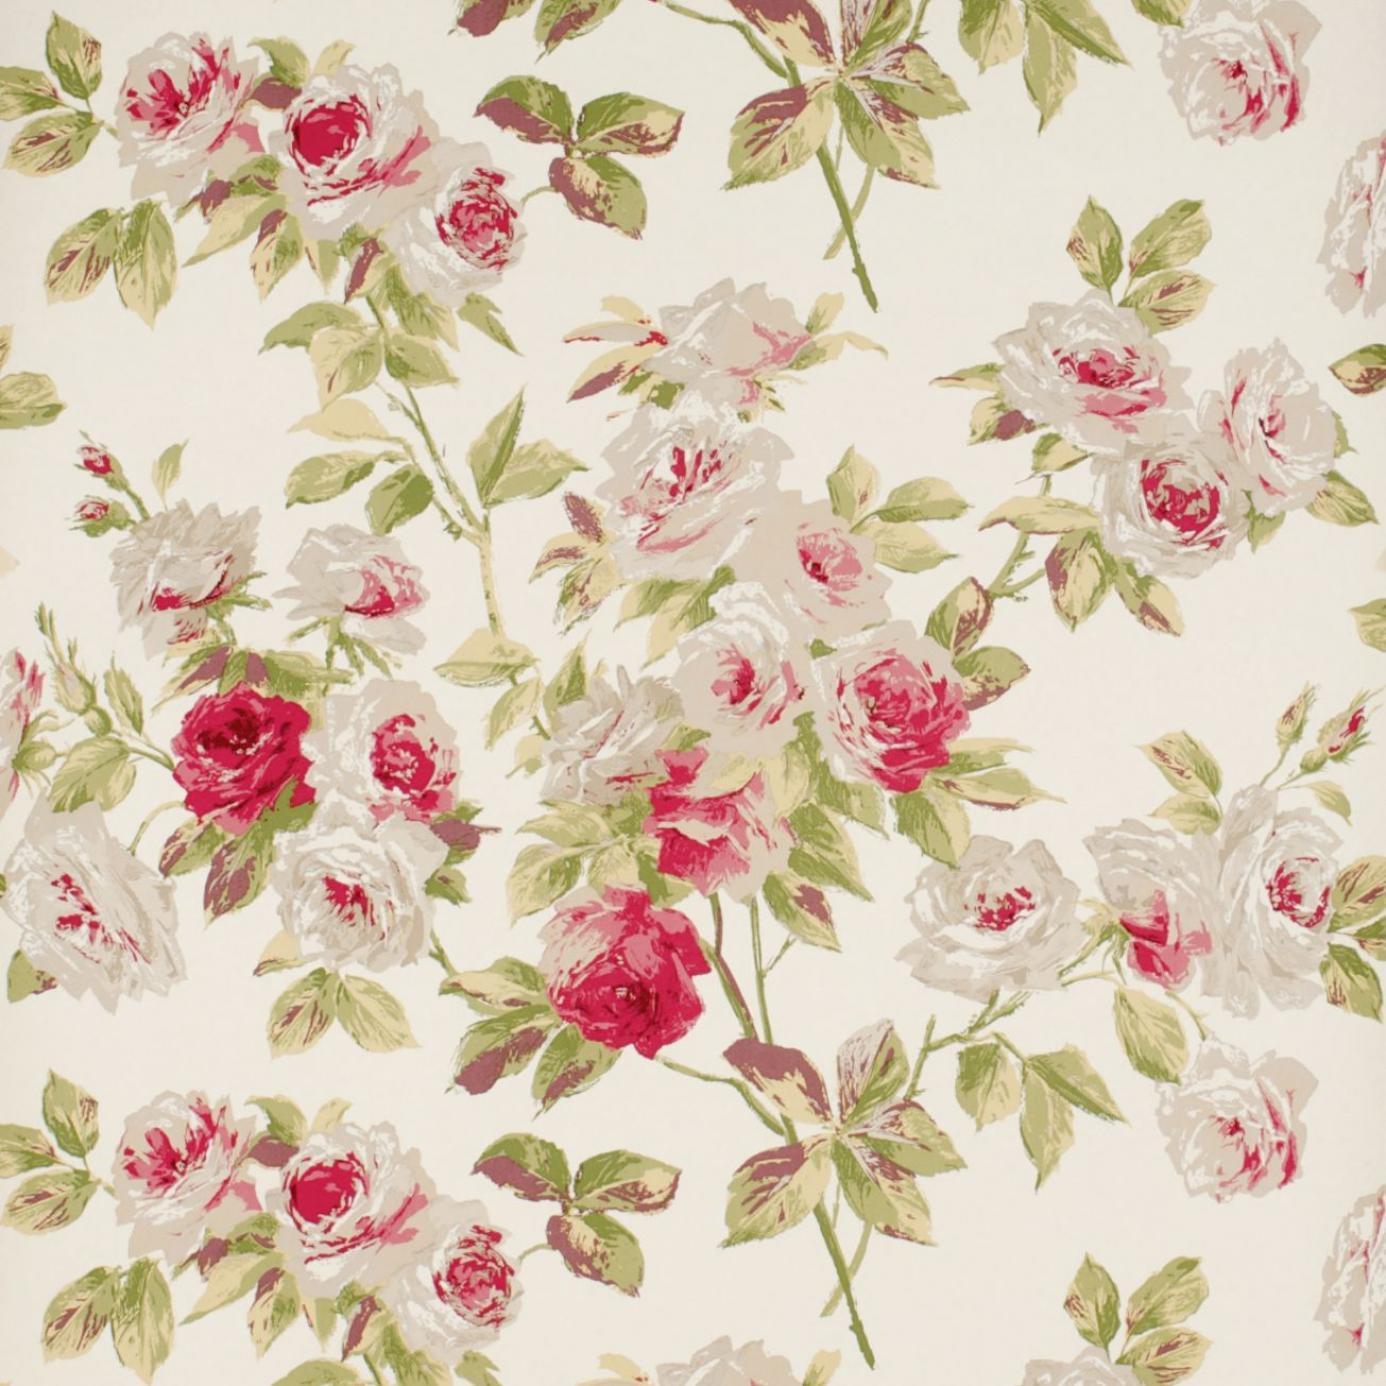 Free Vintage Flower Wallpaper Full HD